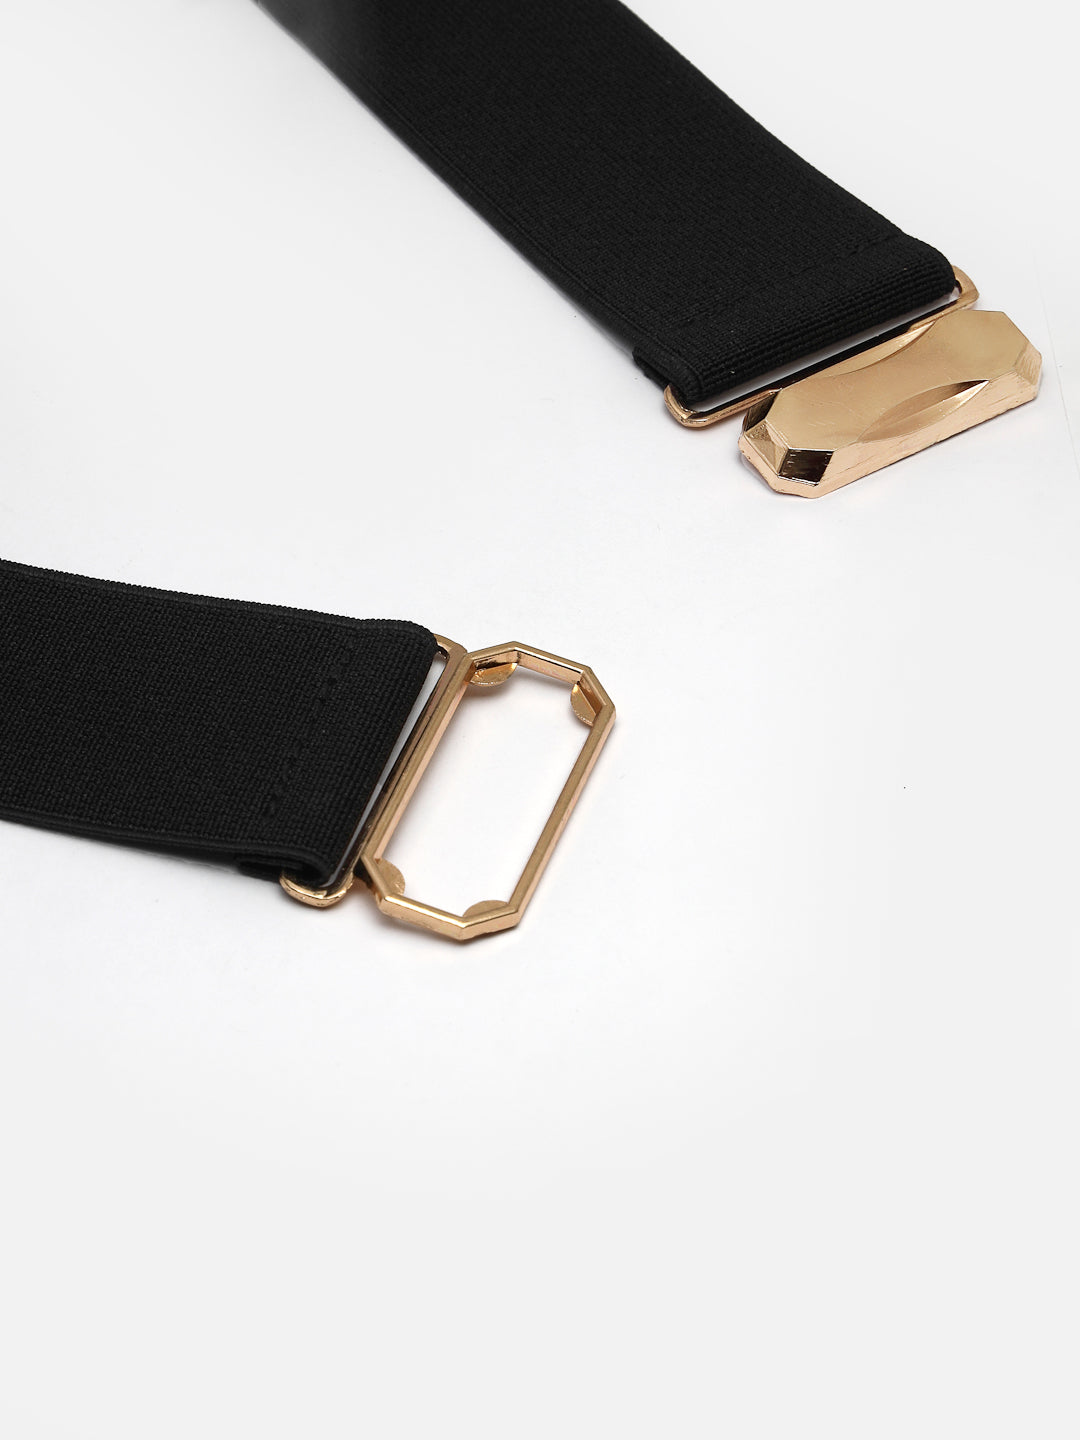 Women's circular gold plated adjustable broad belt - NVR